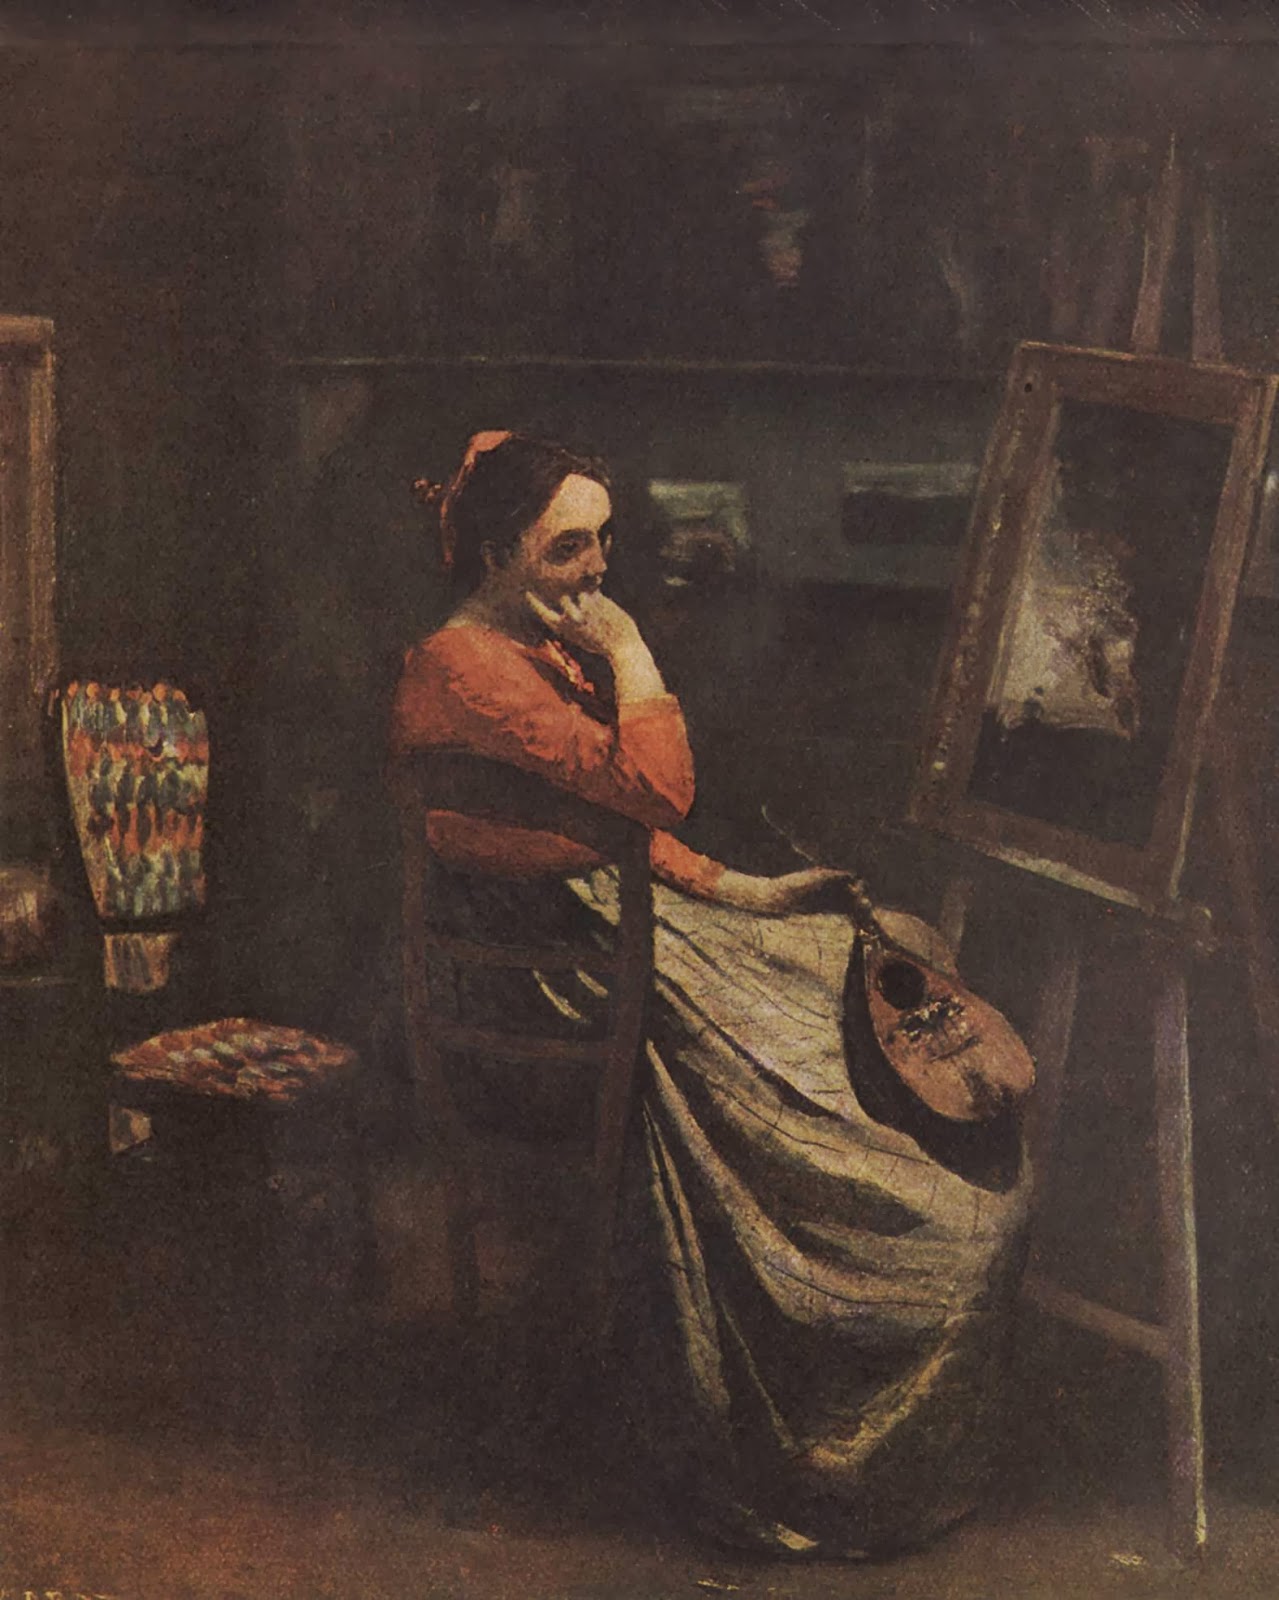 L'atelier de Corot, ca. 1865